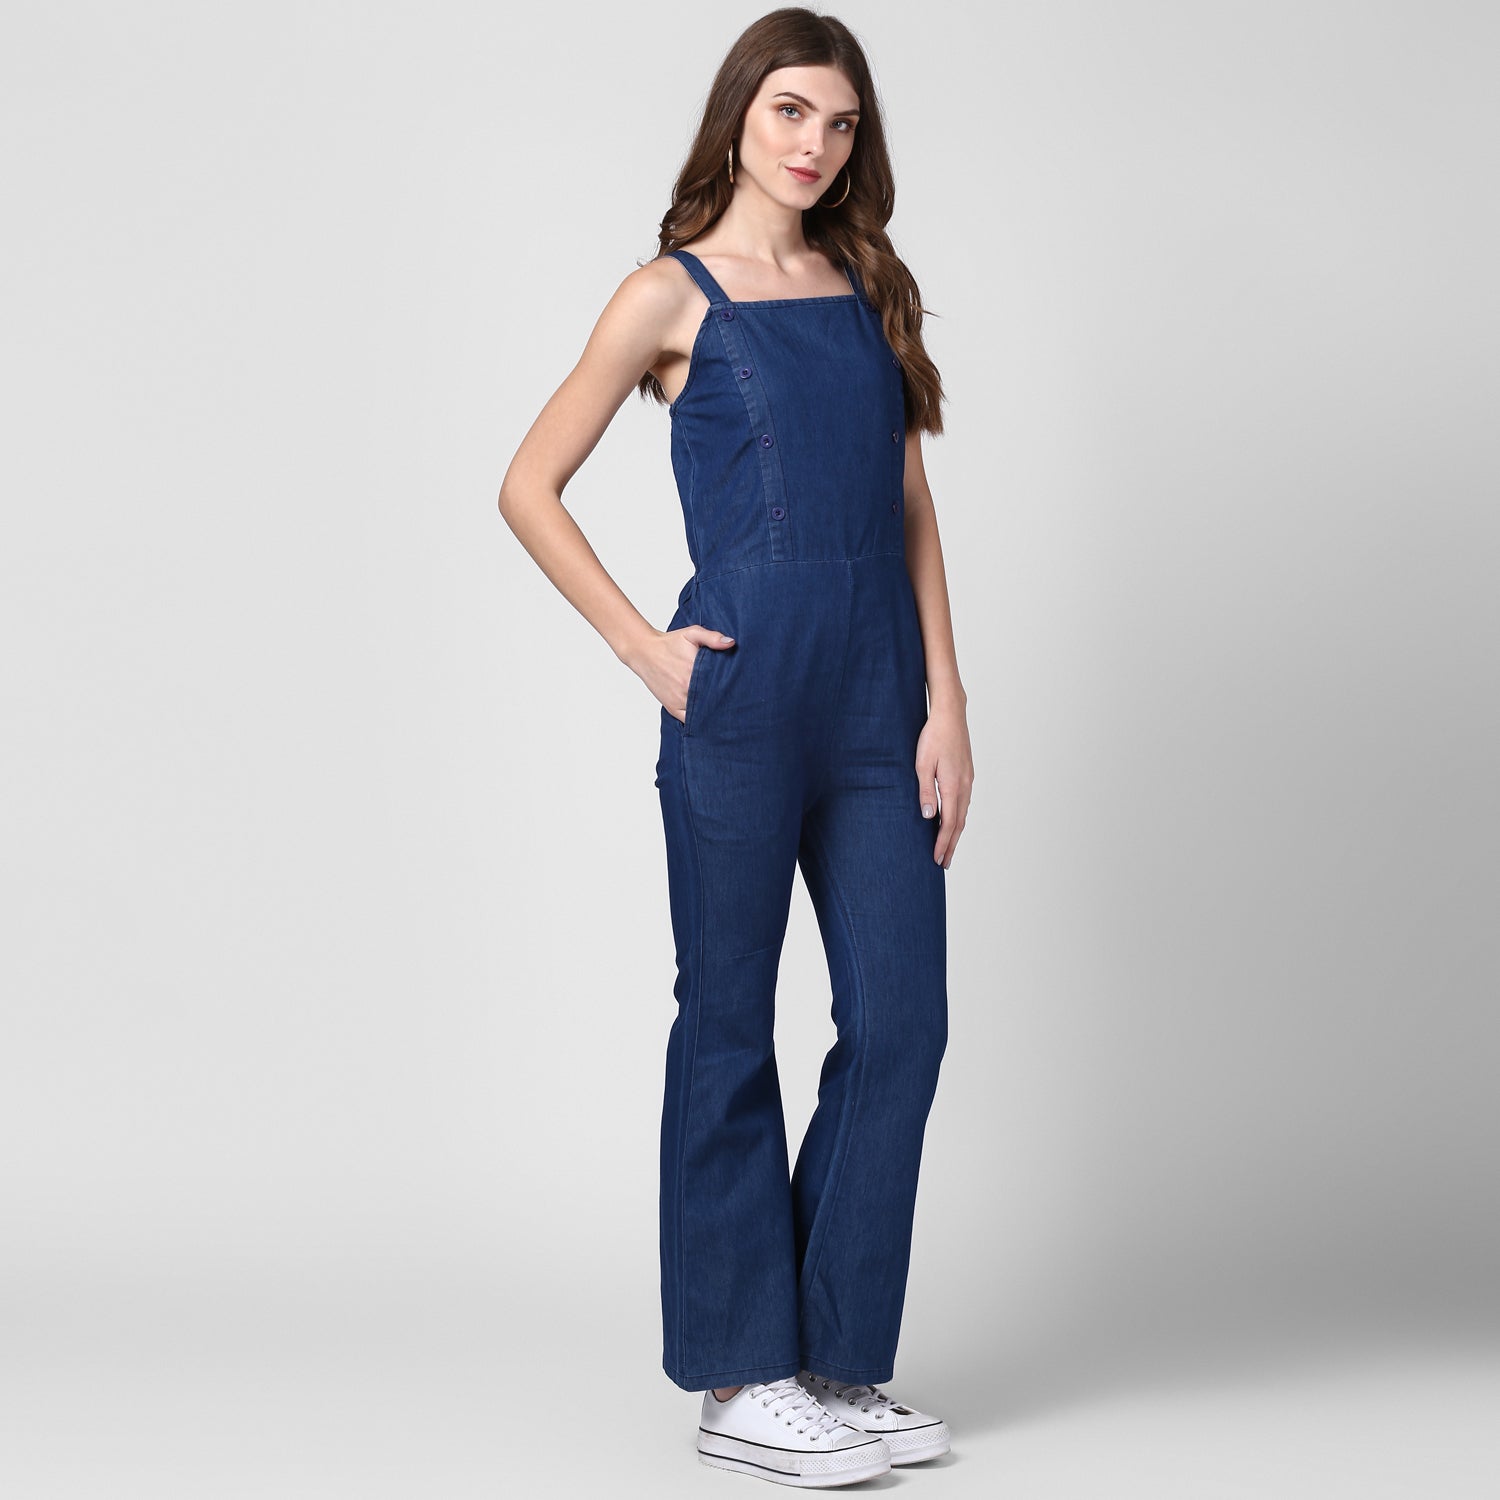 Women's Blue Denim Strap style Jumpsuit with bootcut pants - StyleStone